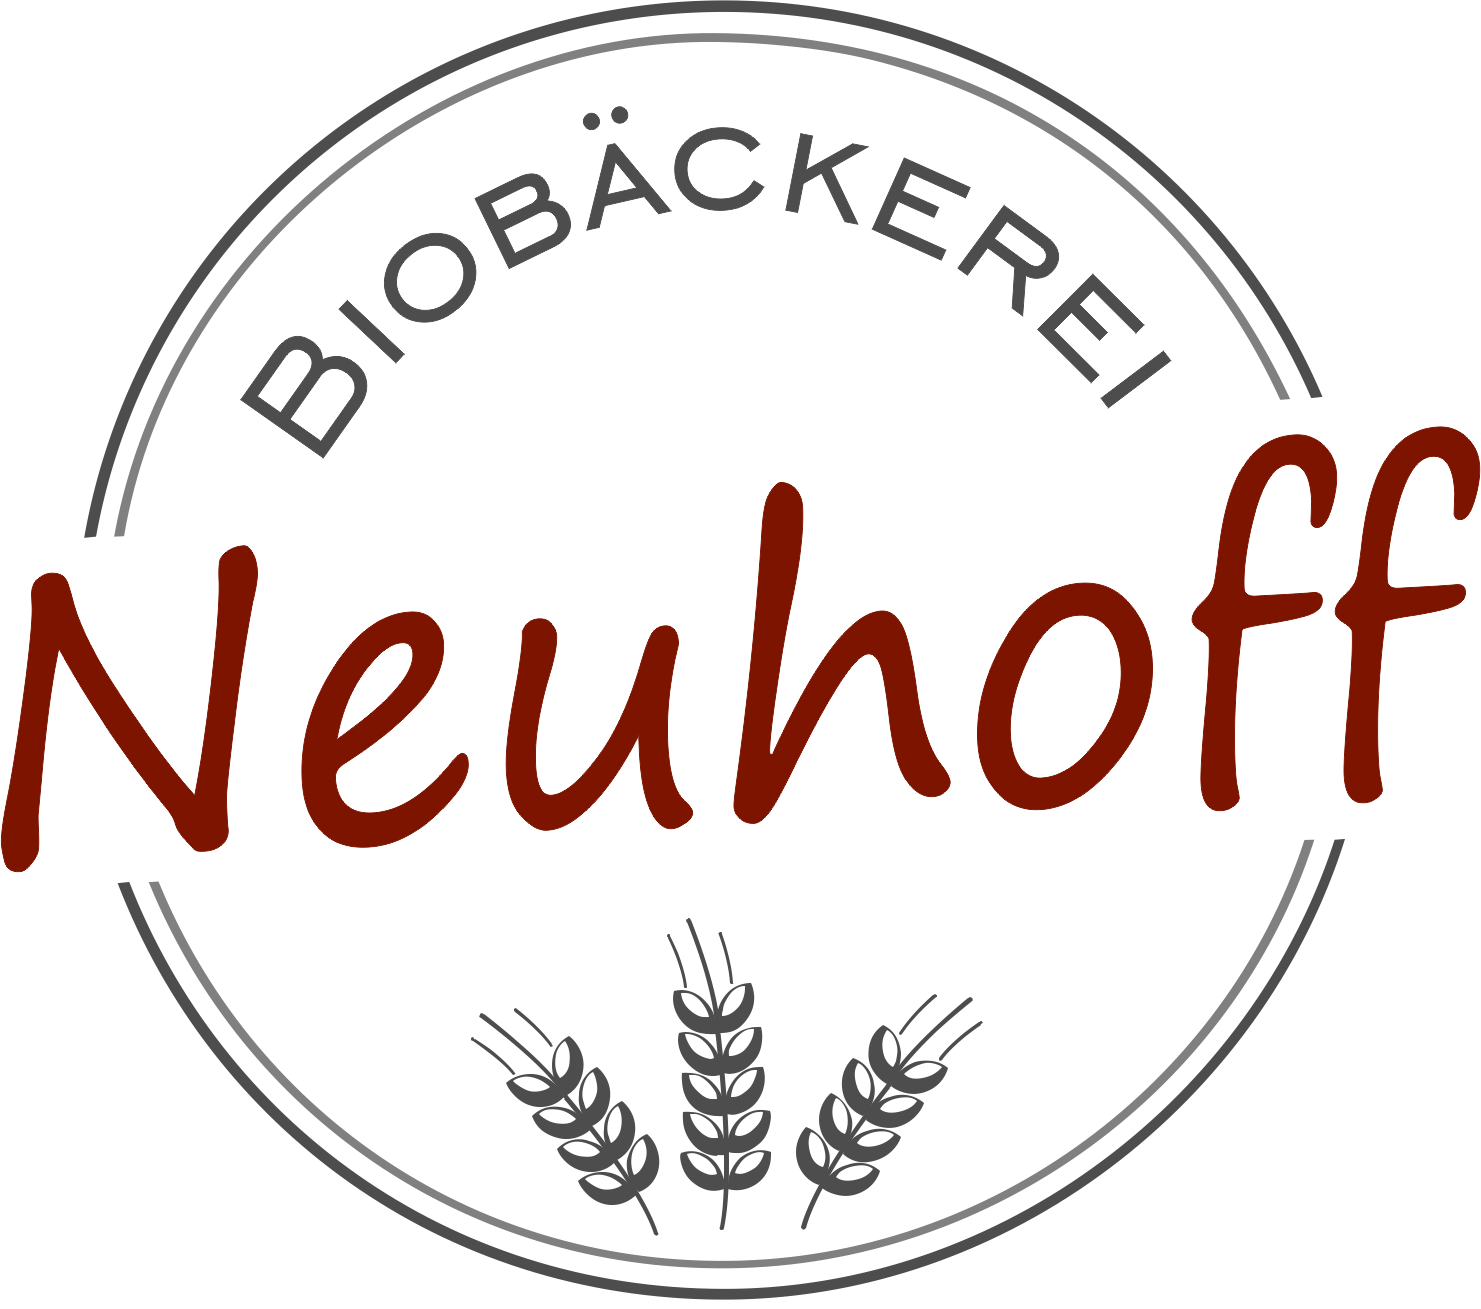 Biobäckerei Neuhoff Regensburg